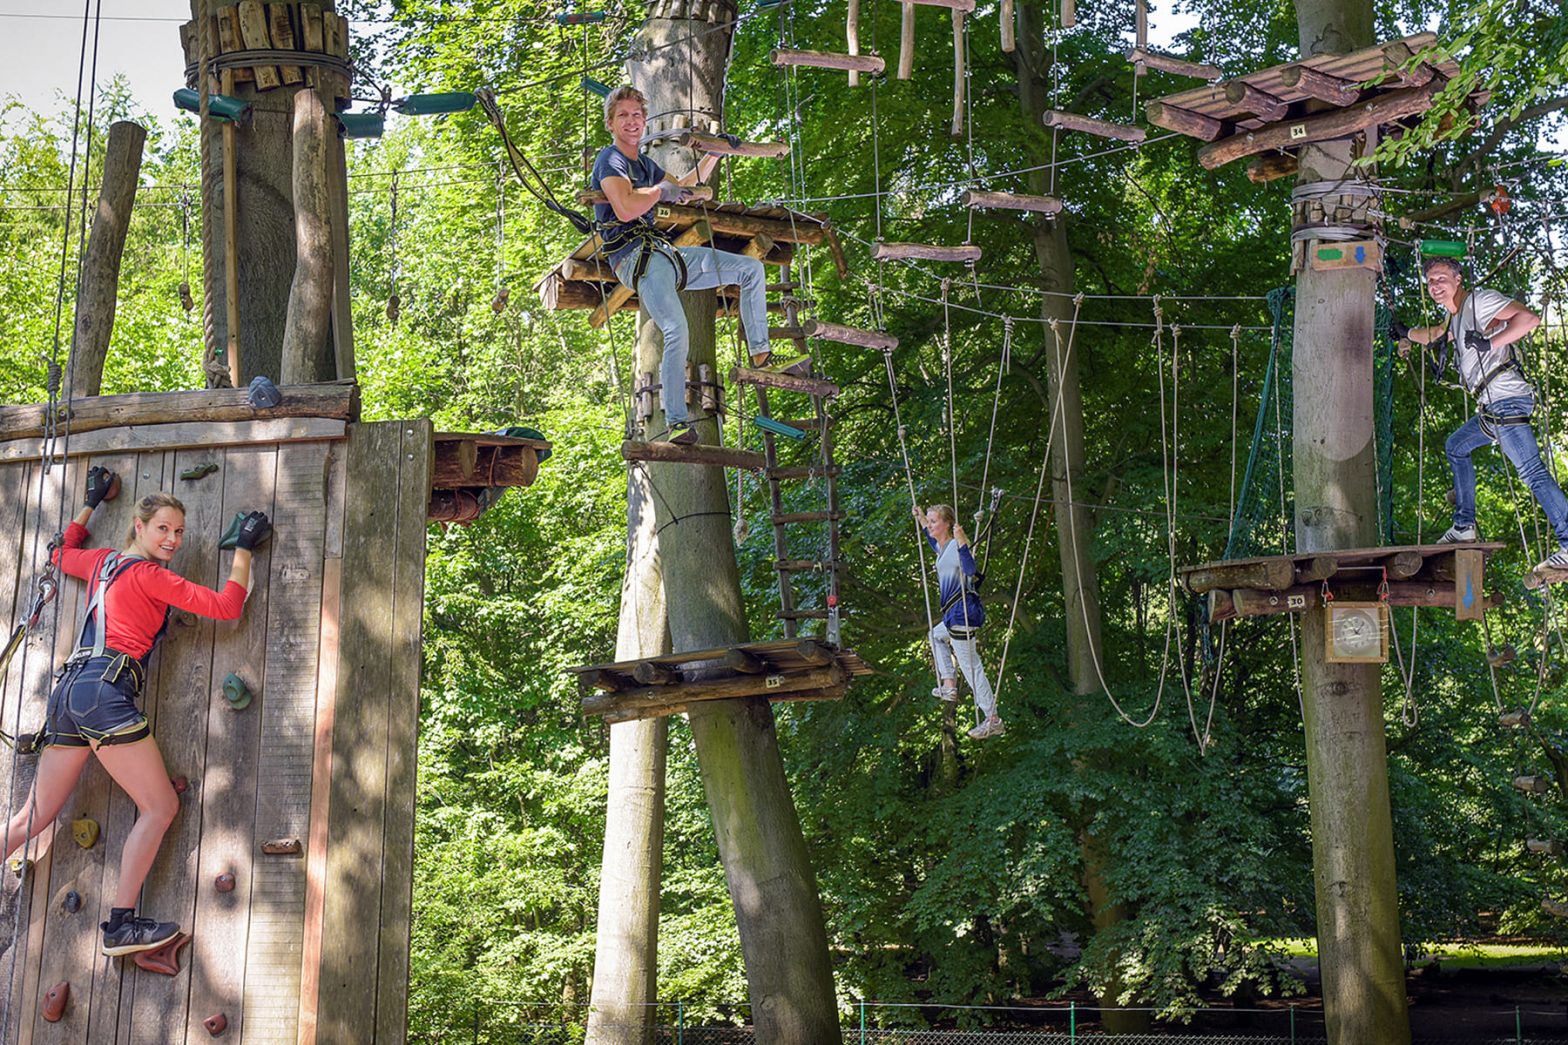 Waldhochseilgarten Jungfernheide - Berlin's Tree Top High Ropes Course